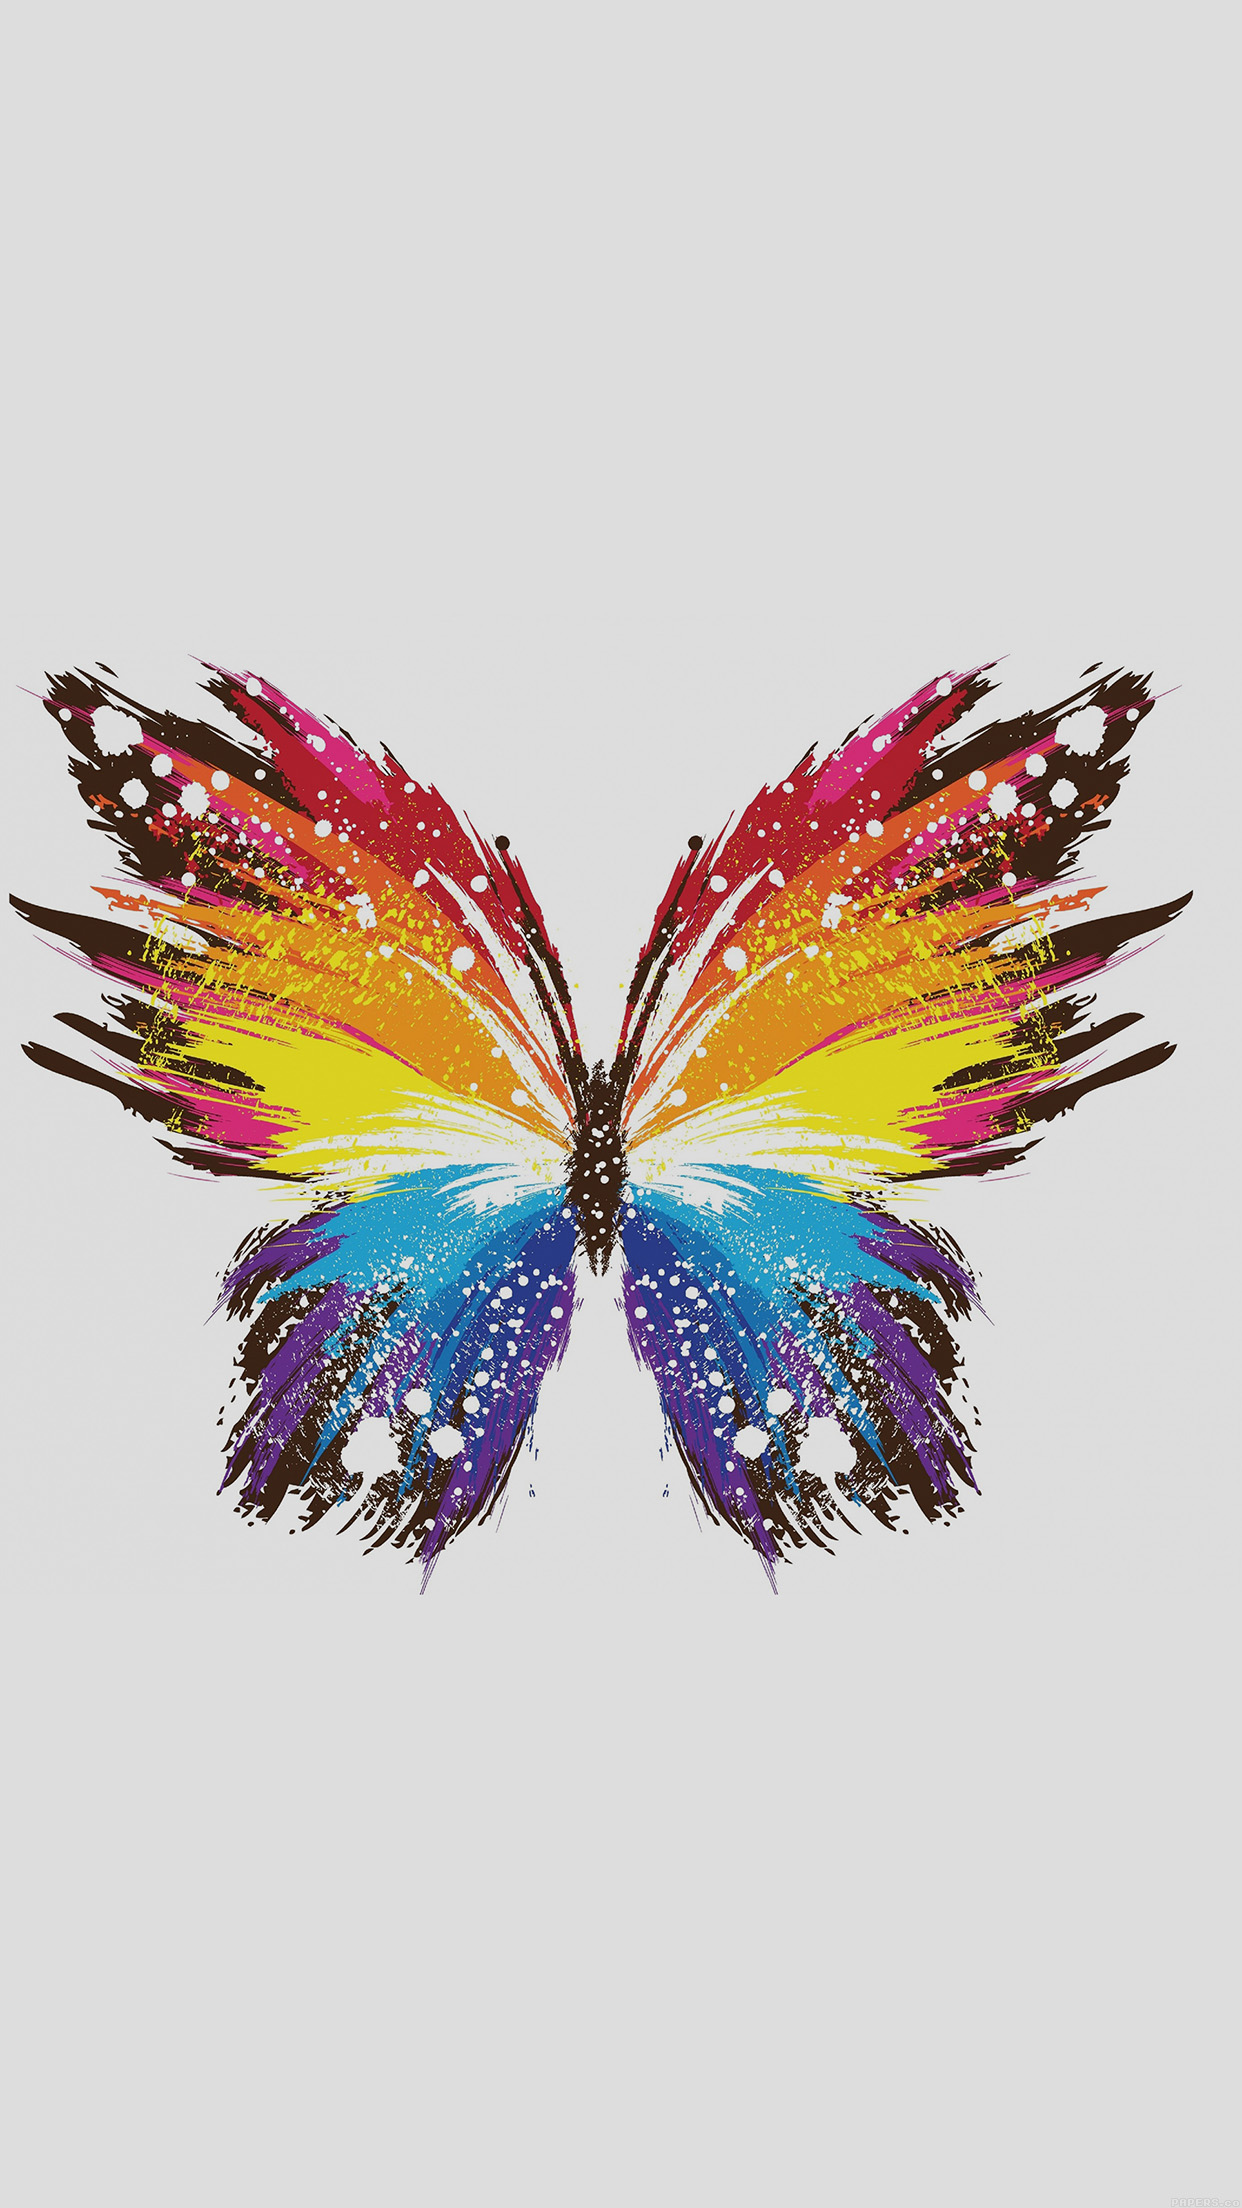 mariposa fondo de pantalla para iphone,mariposa,ala,pluma,insecto,polillas y mariposas